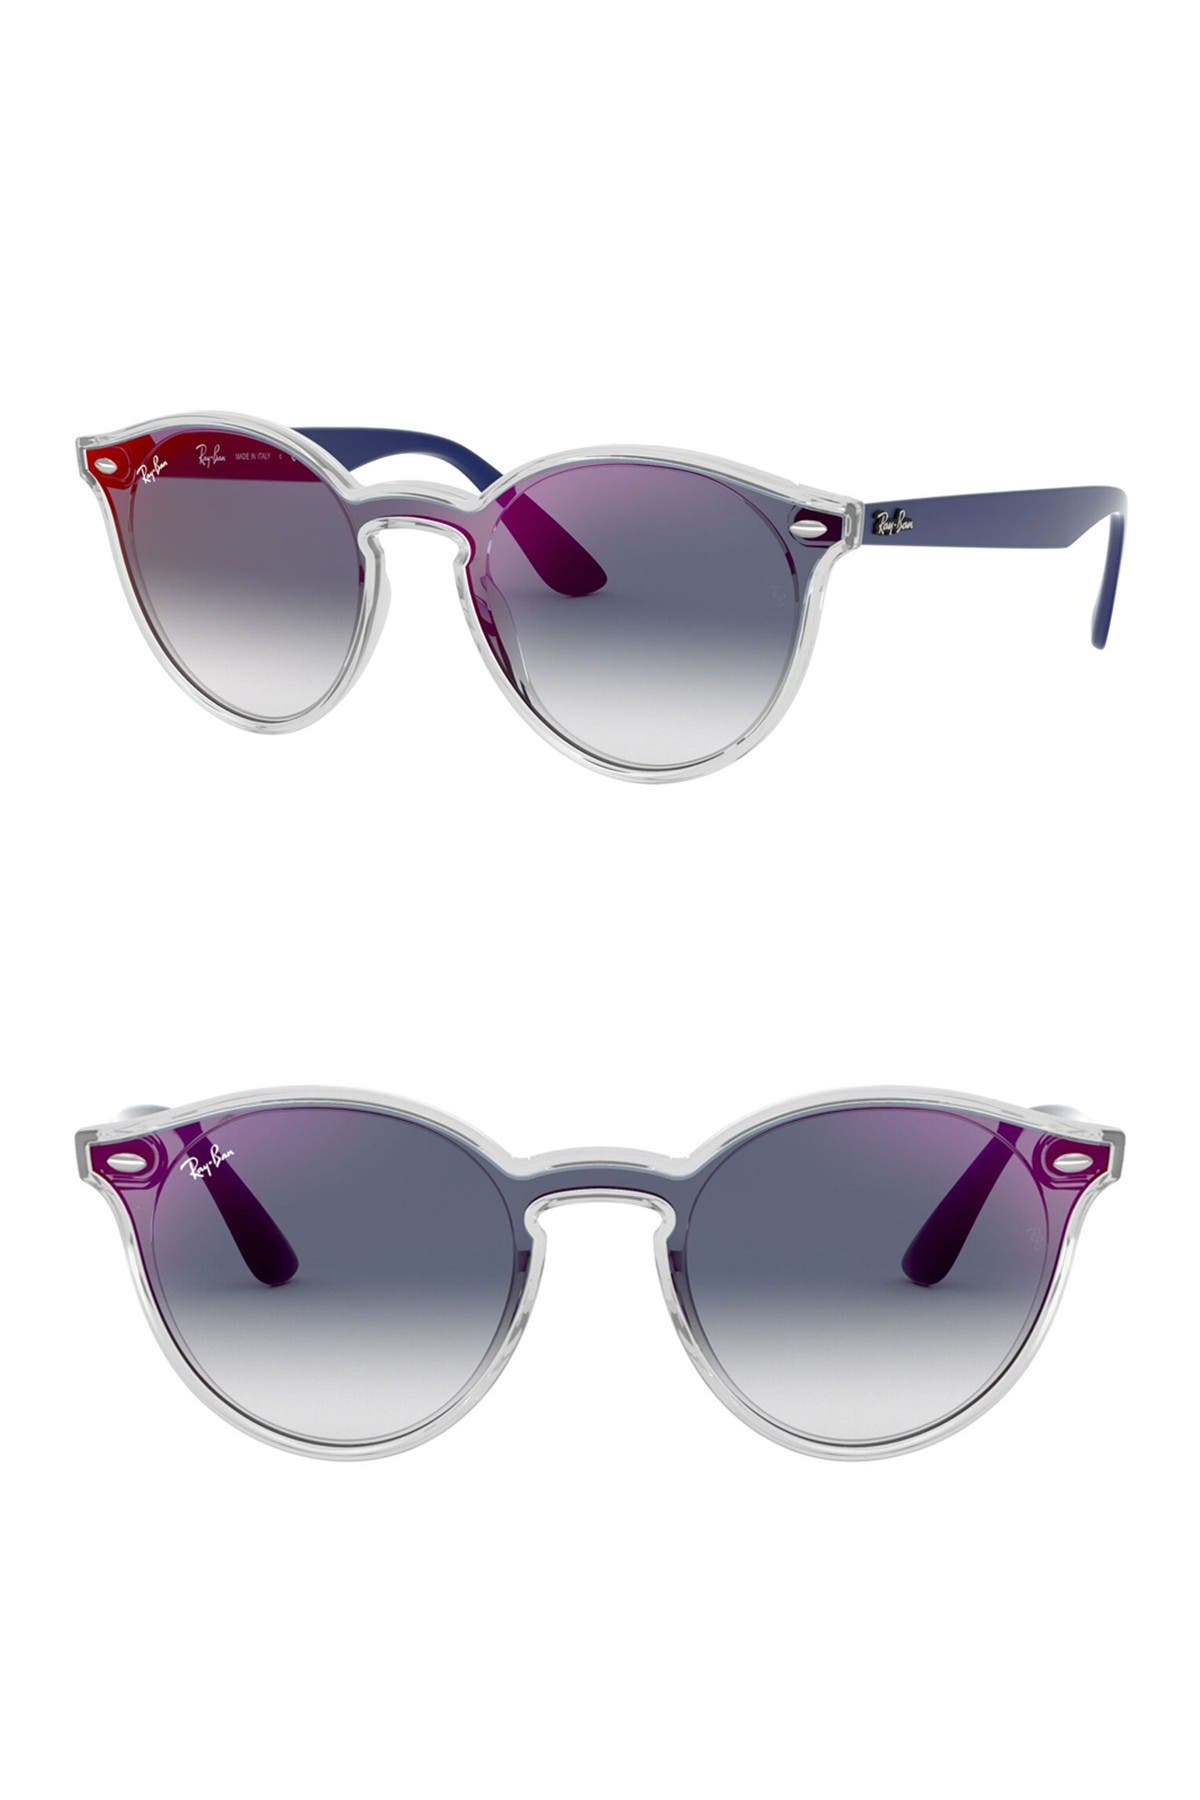 Ray Ban 39mm Phantos Sunglasses In Purple Blue Modesens